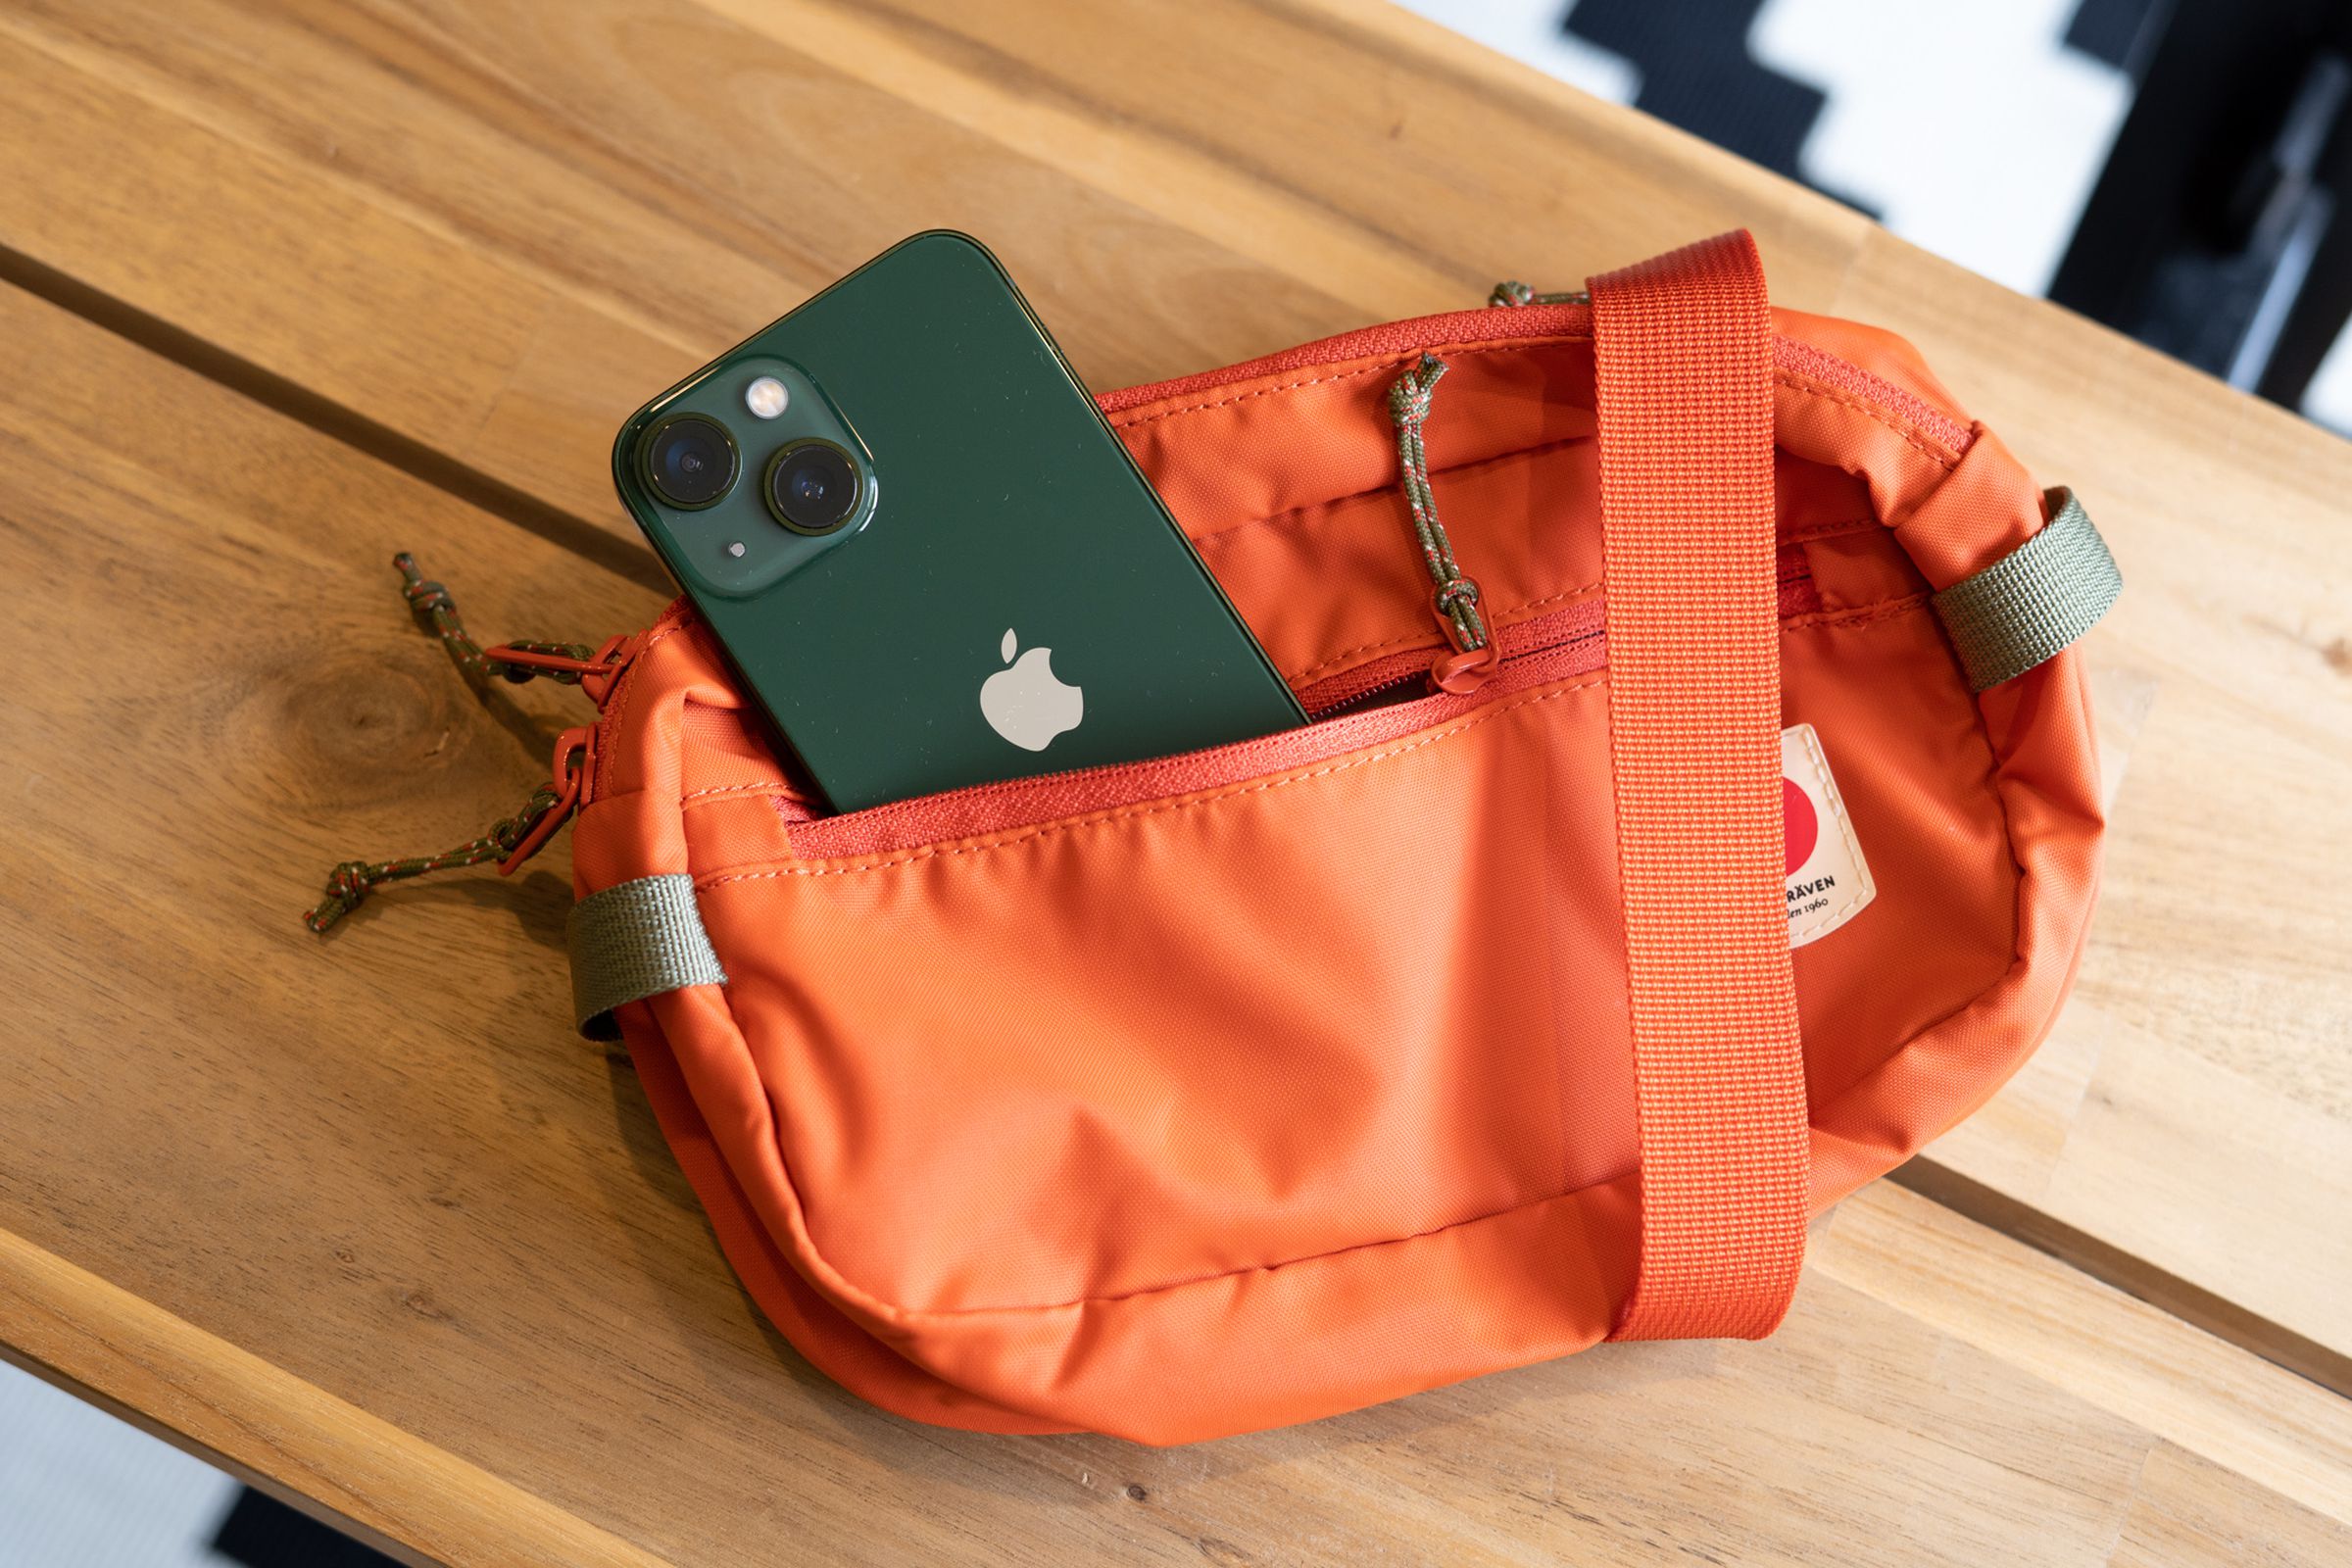 iPhone 13 Mini in the front pocket of an orange belt bag.